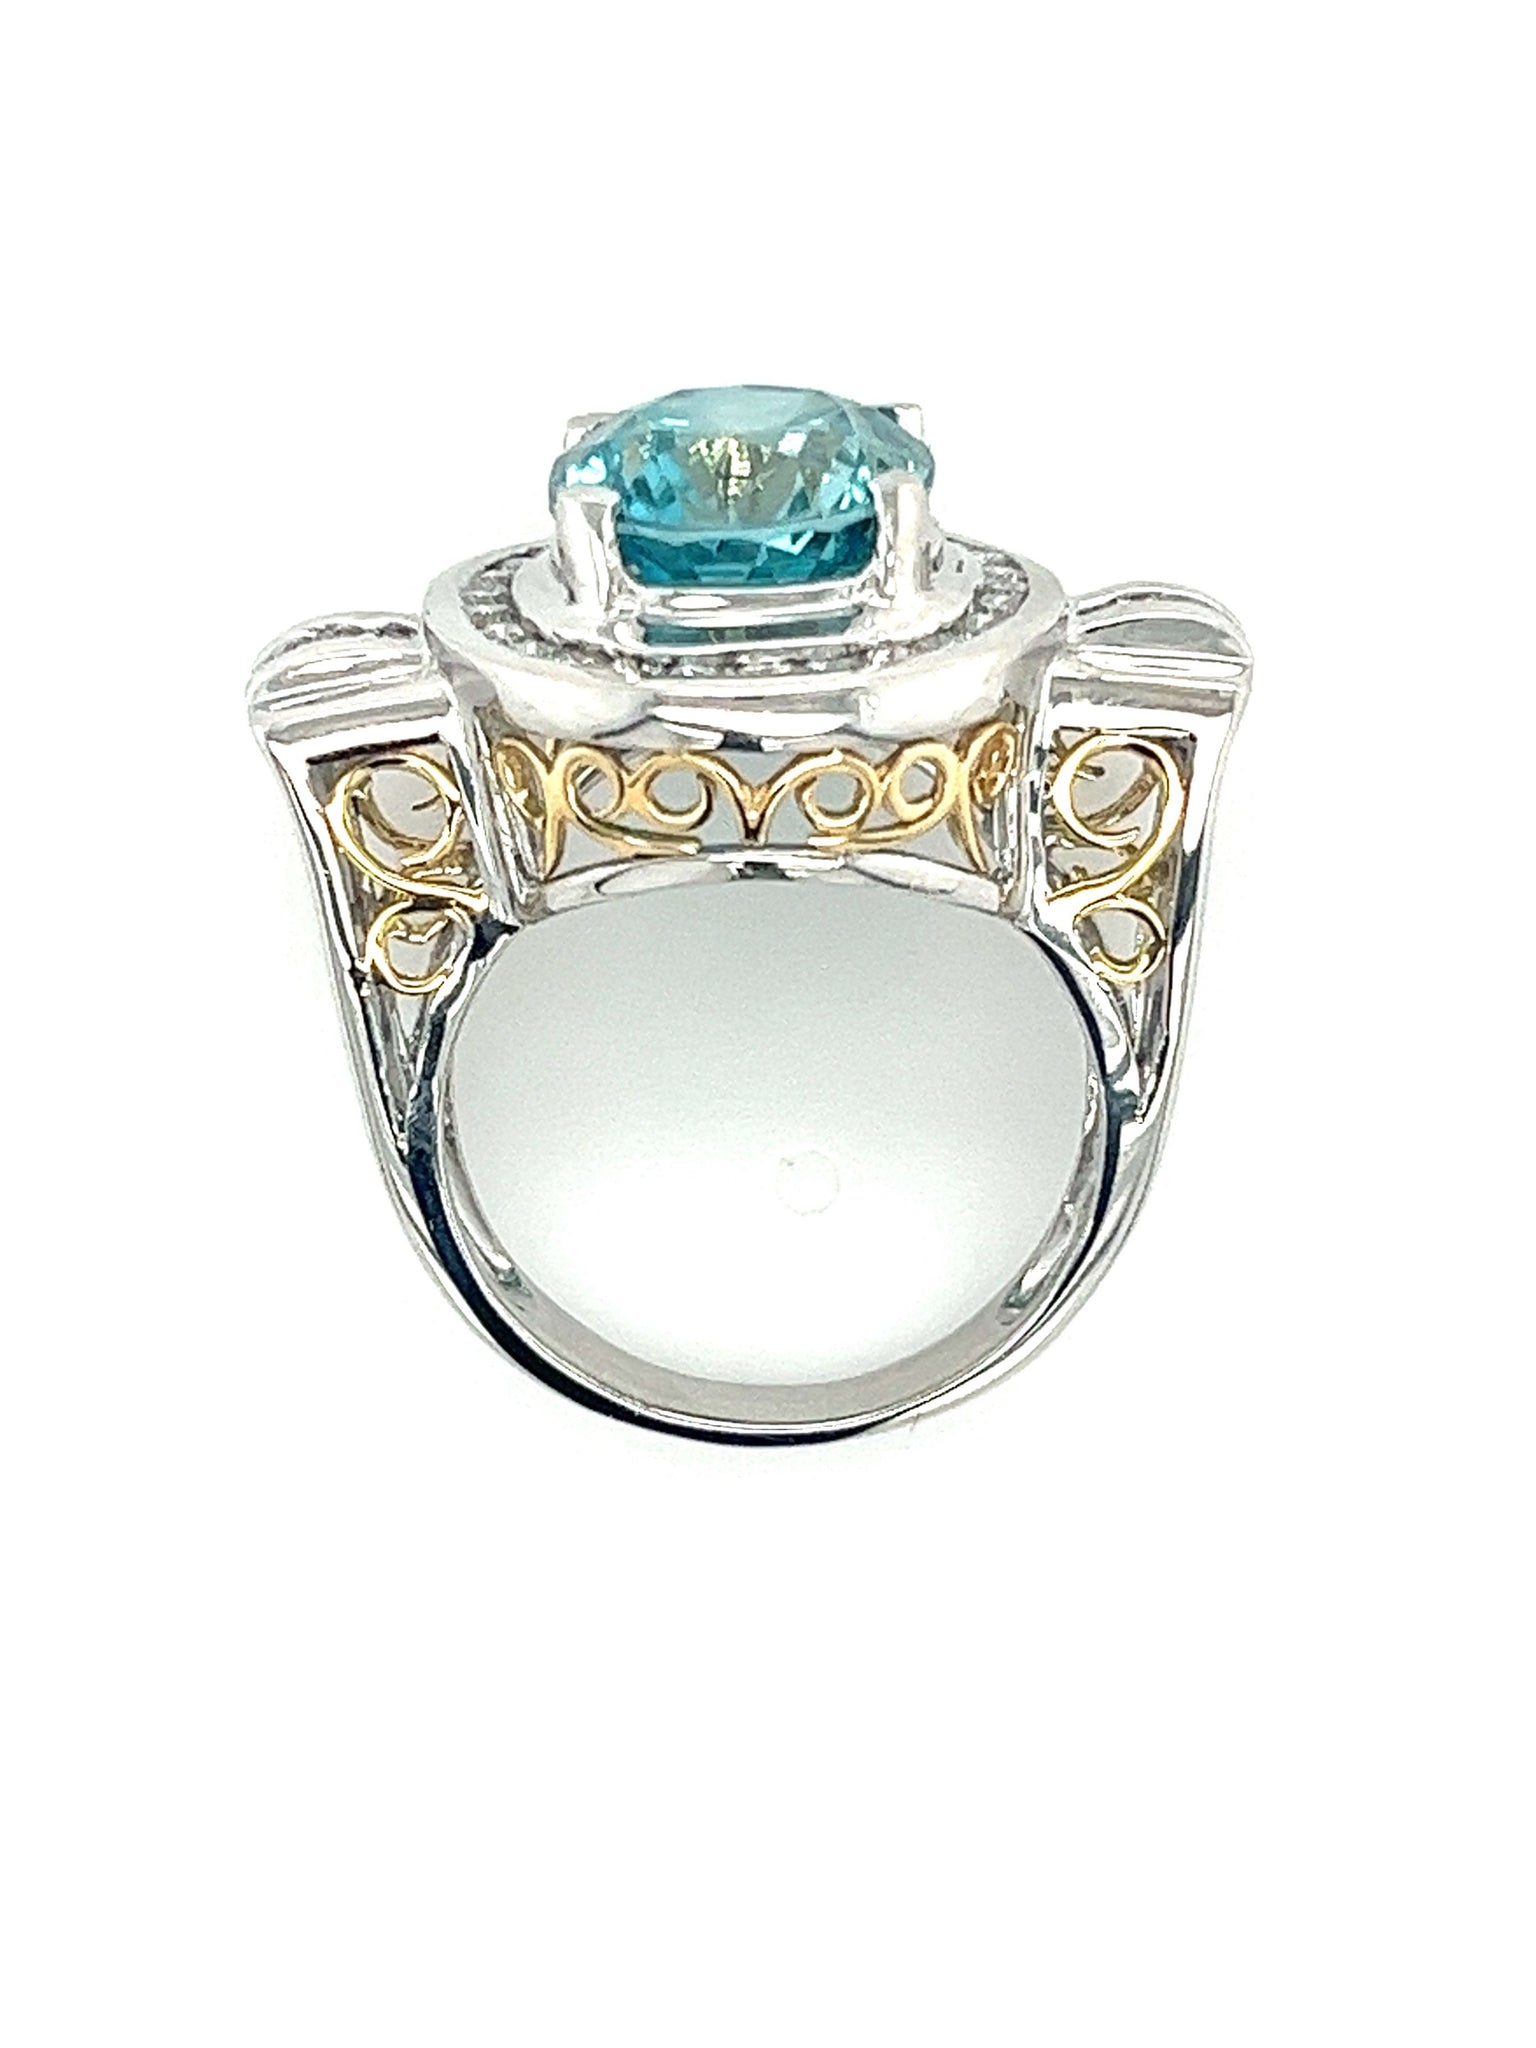 Vintage Retro Style 8 Carat Oval Cut Blue Zircon with Diamond Halo in Platinum & 18K Gold Filigree Set Ring